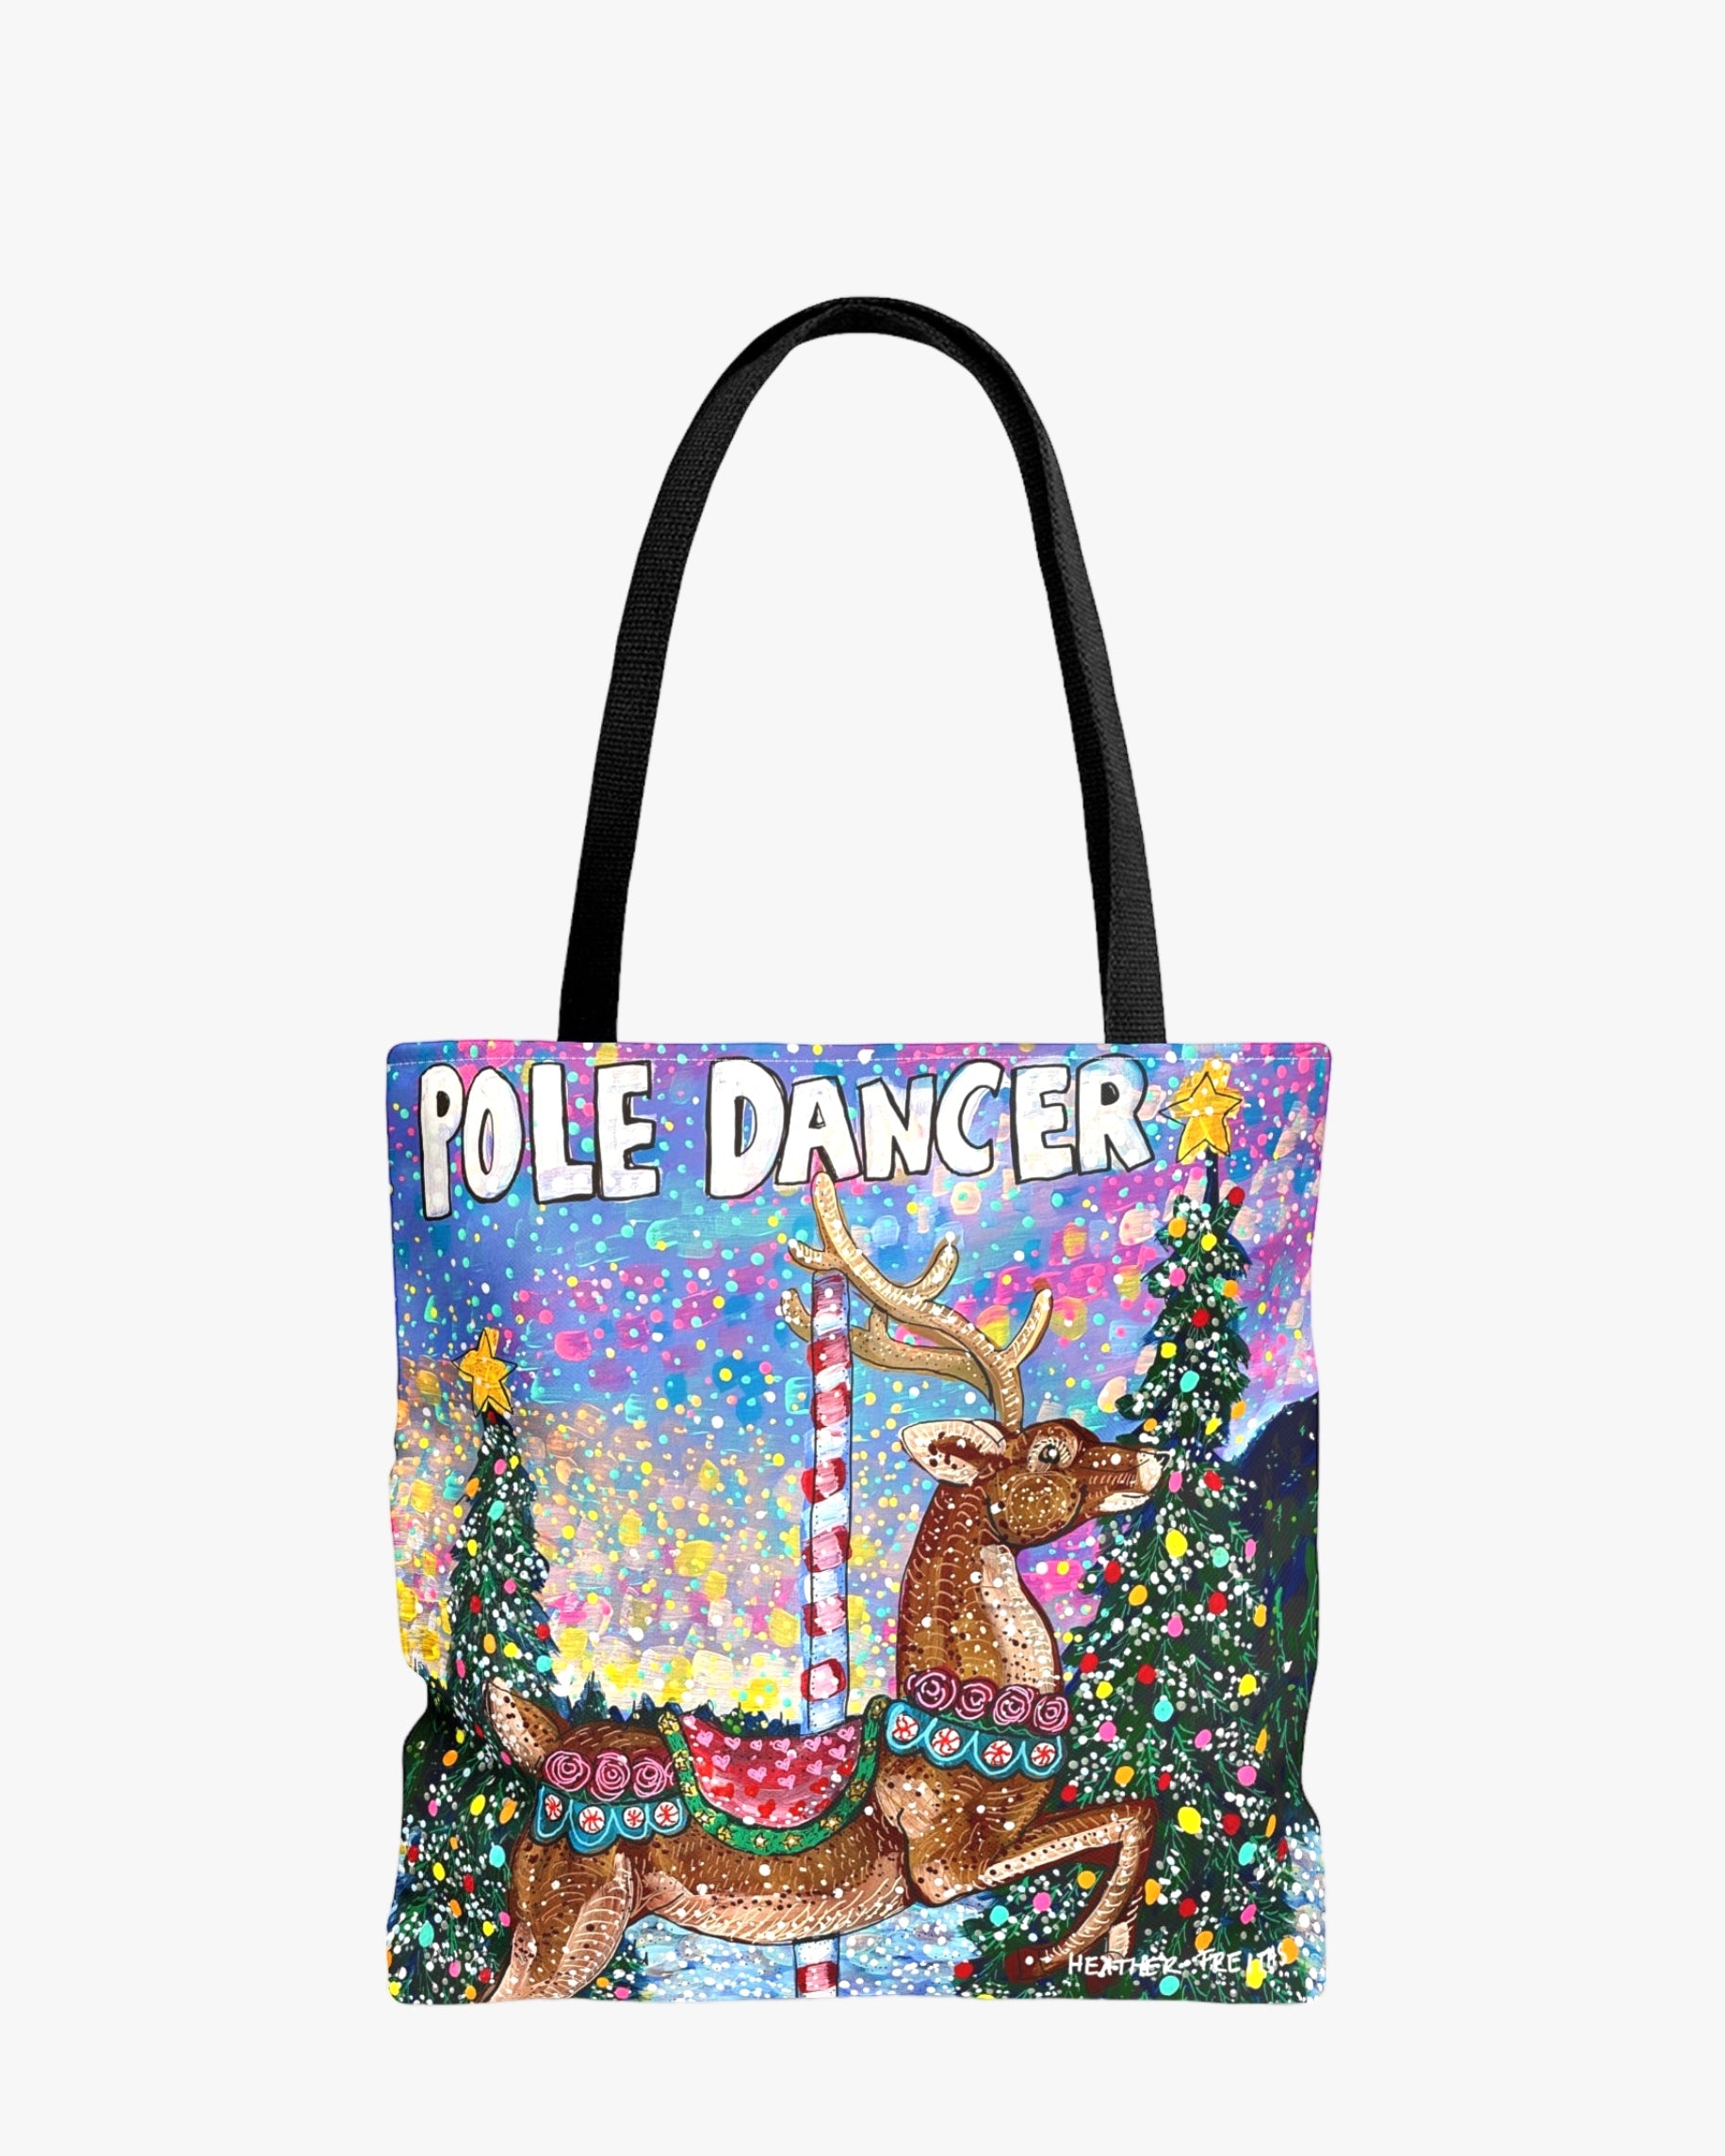 Pole Dancer Tote Bag